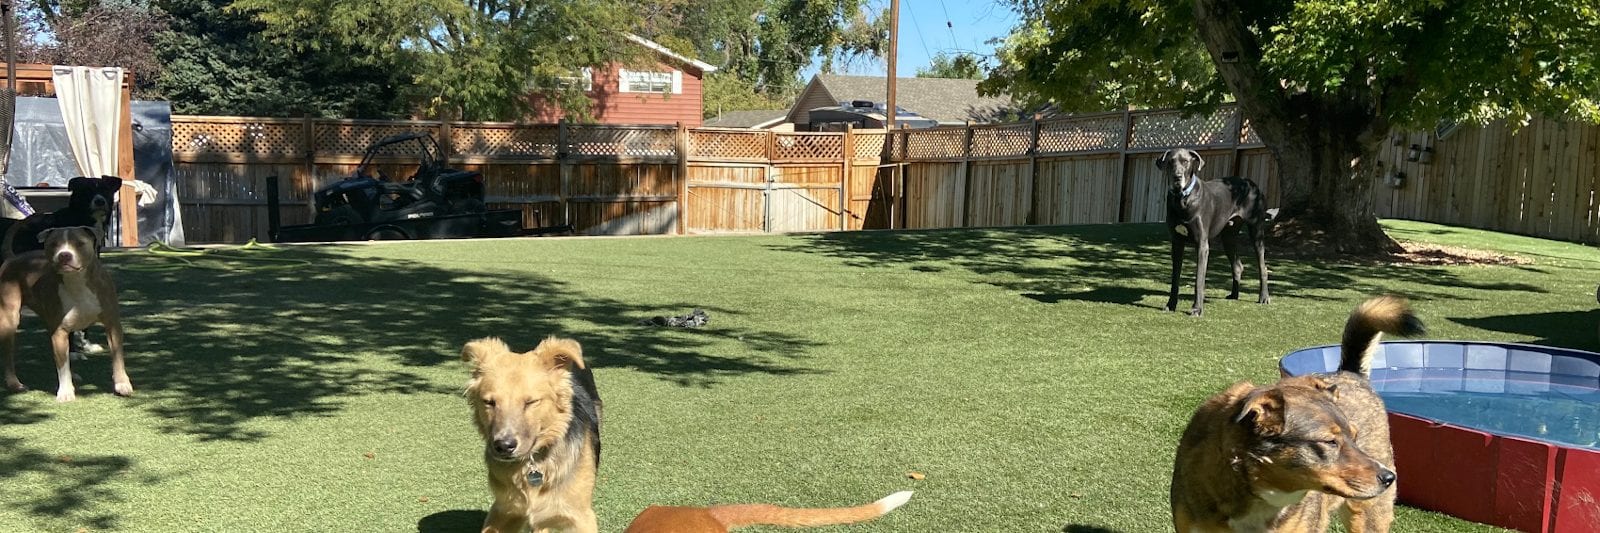 Rover Dog Sitting Backyard Denver Colorado